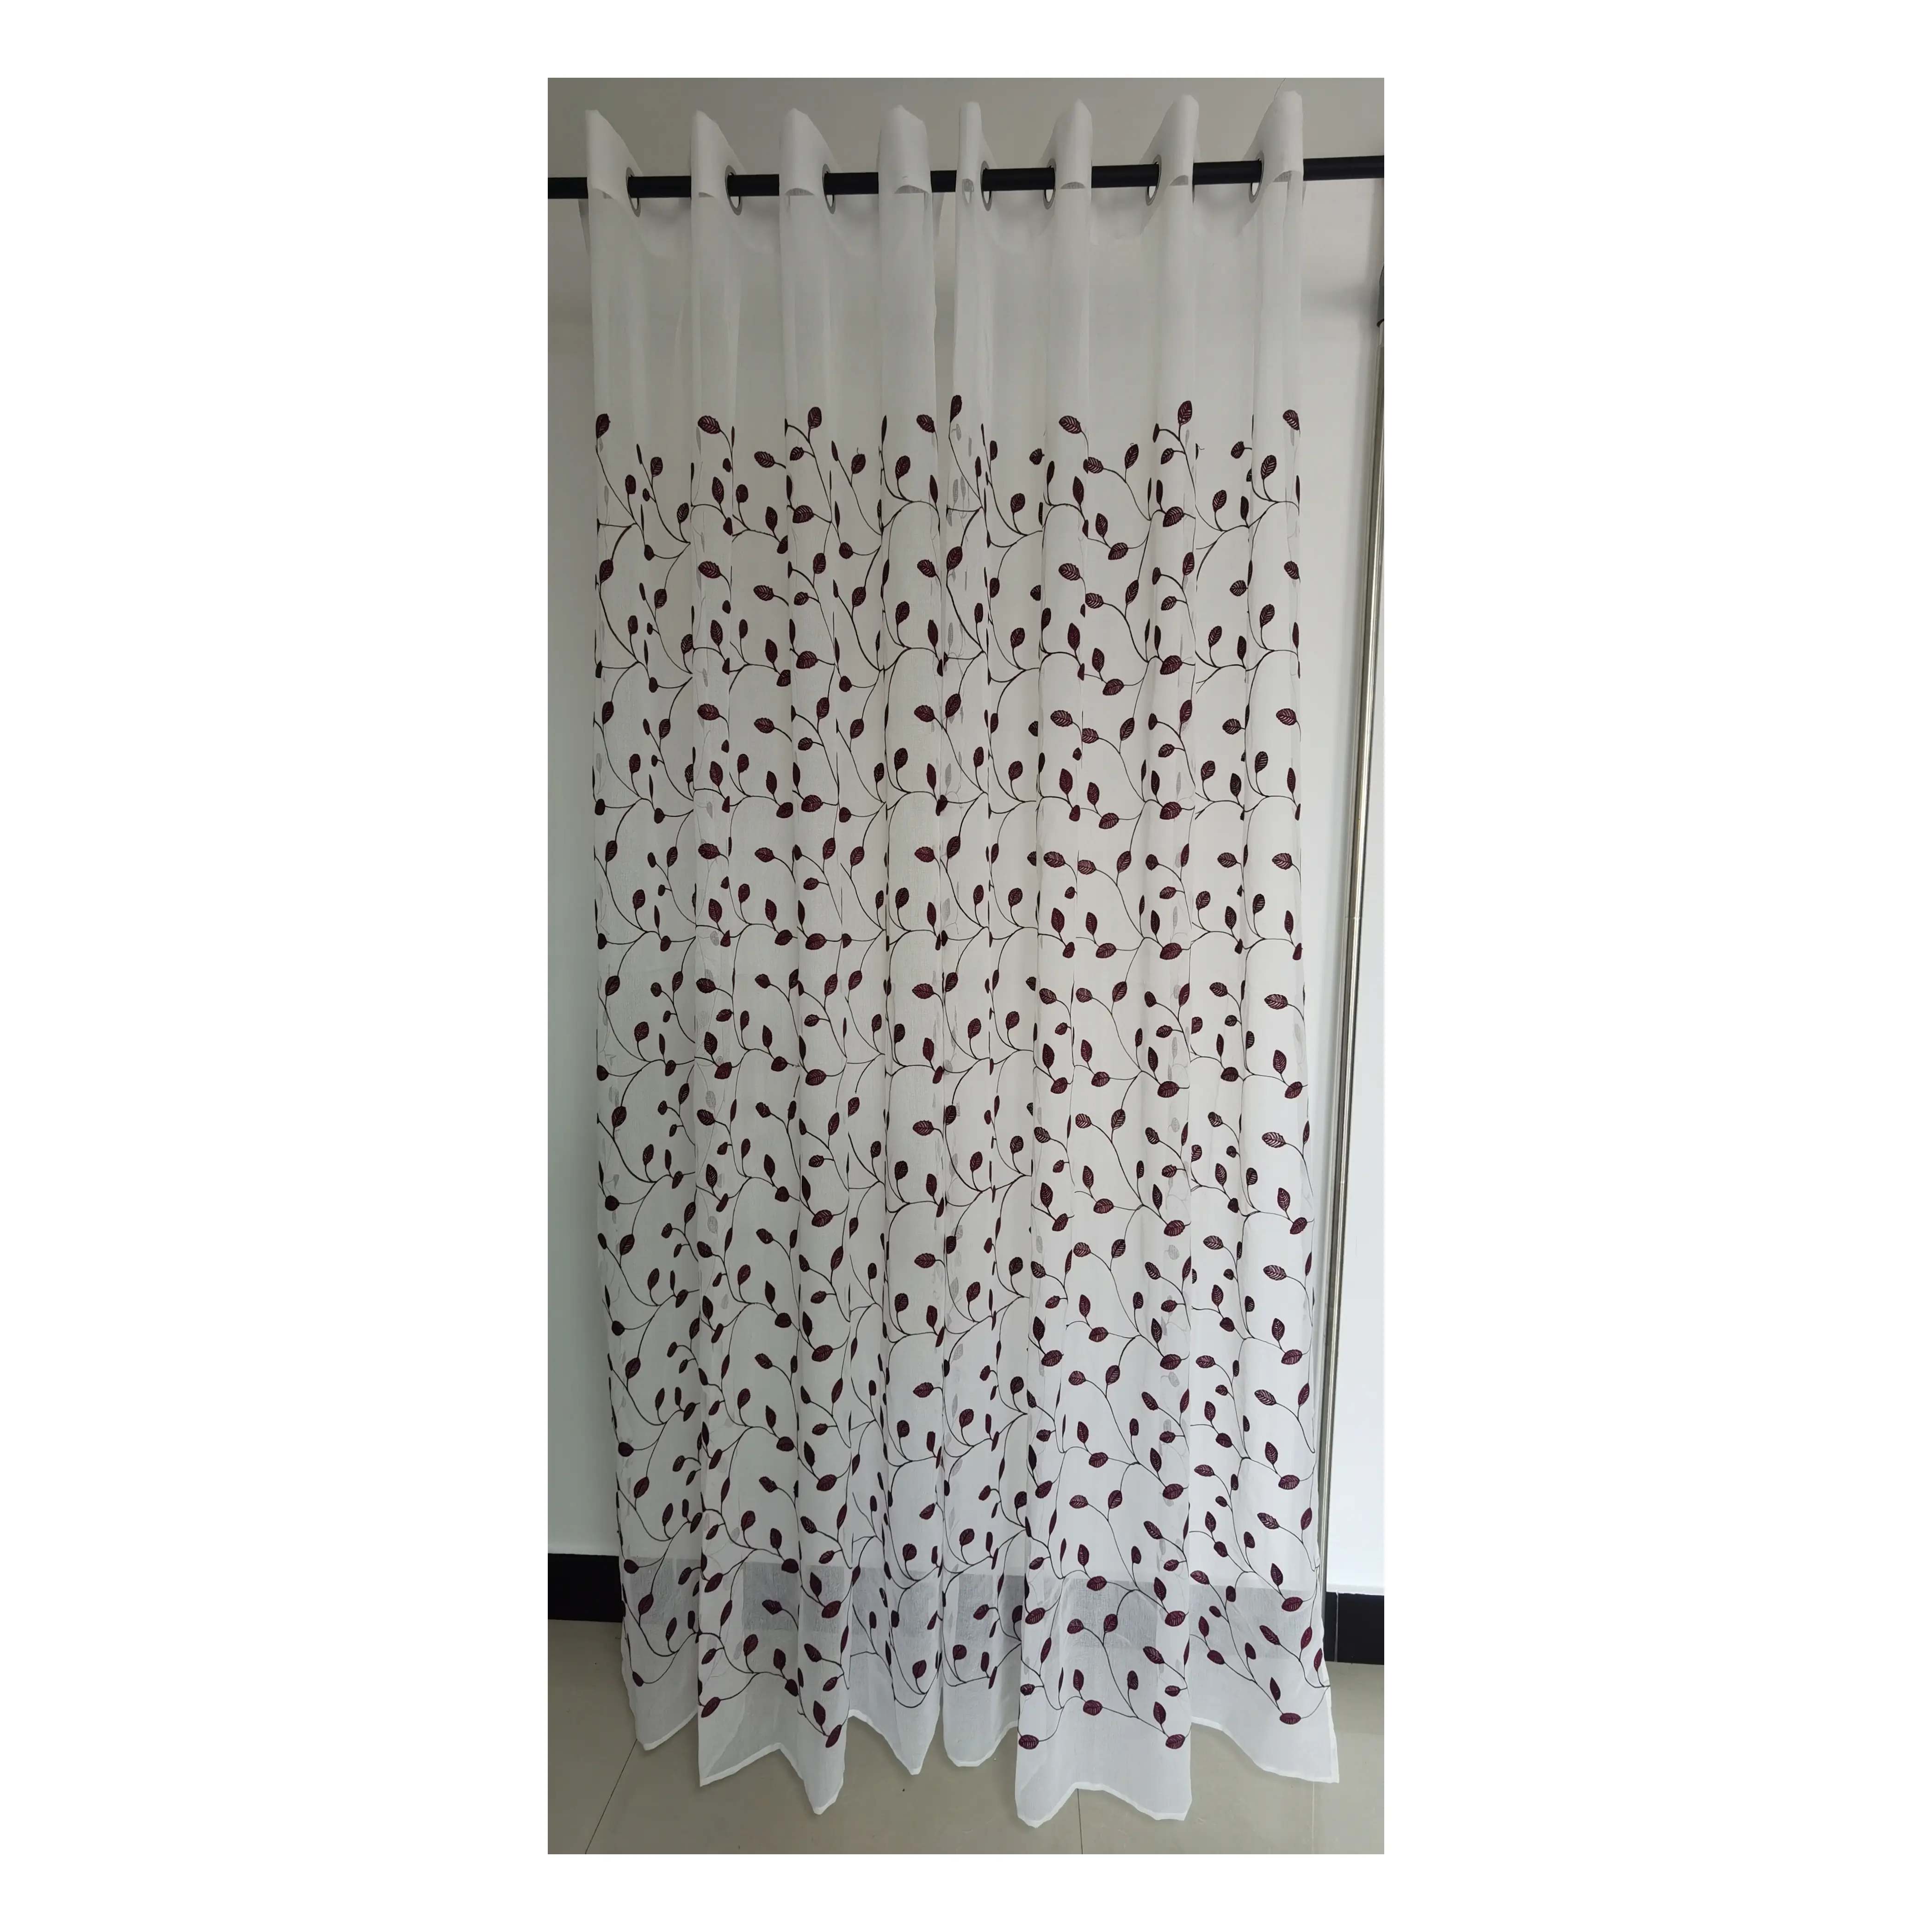 Cortinas transparentes de tul blanco liso para ventana, tela de organza bordada de gasa para sala de estar, dormitorio moderno, gran oferta, 2022